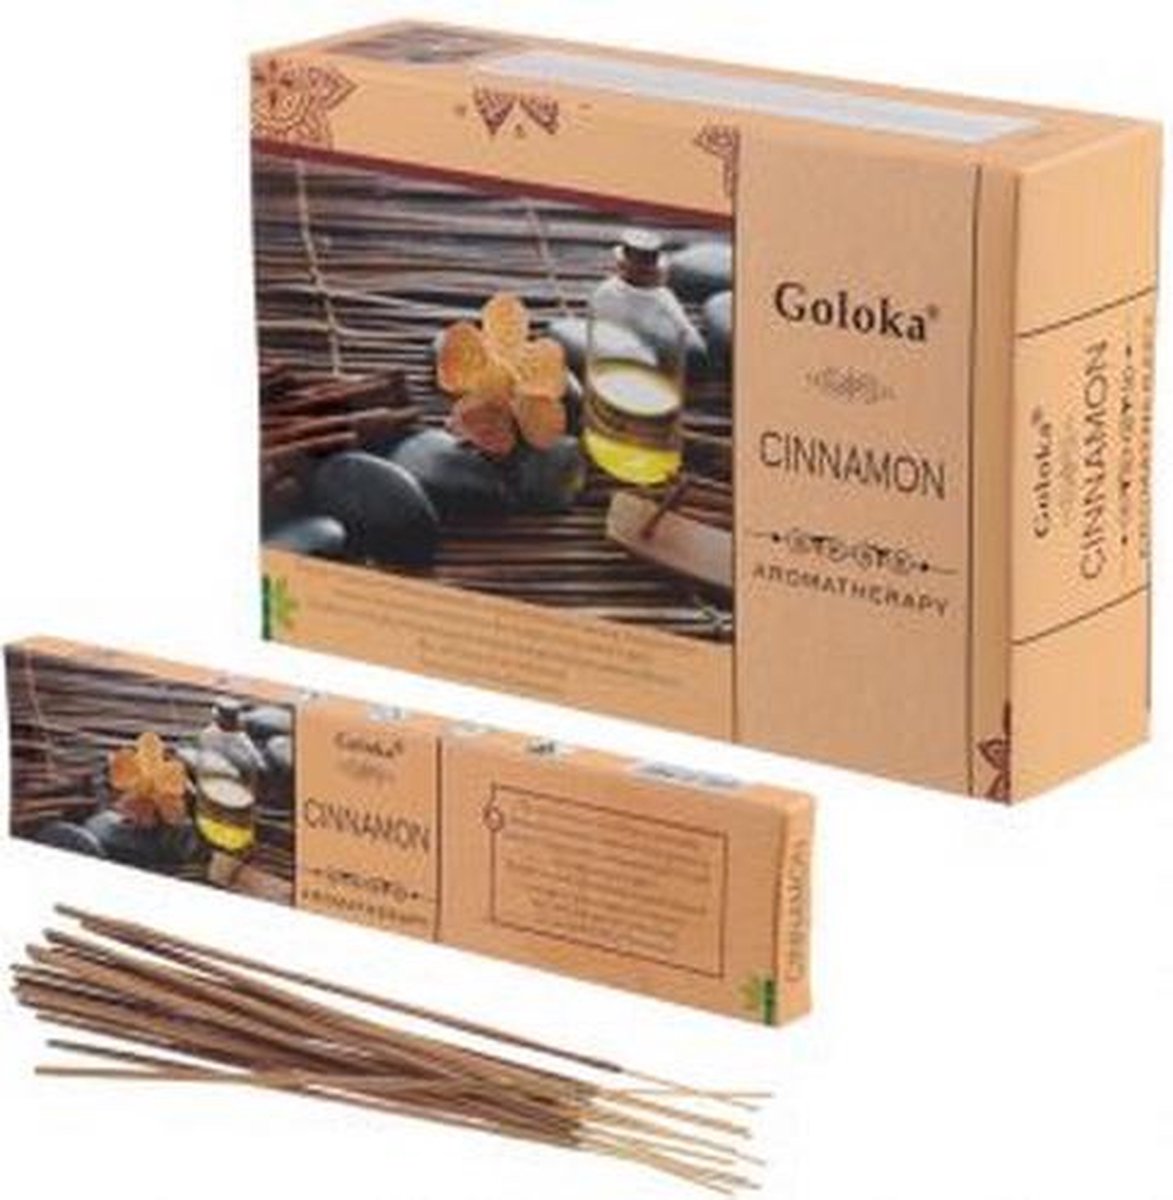 Wierook goloka aromatherapy cinnamon (15g)